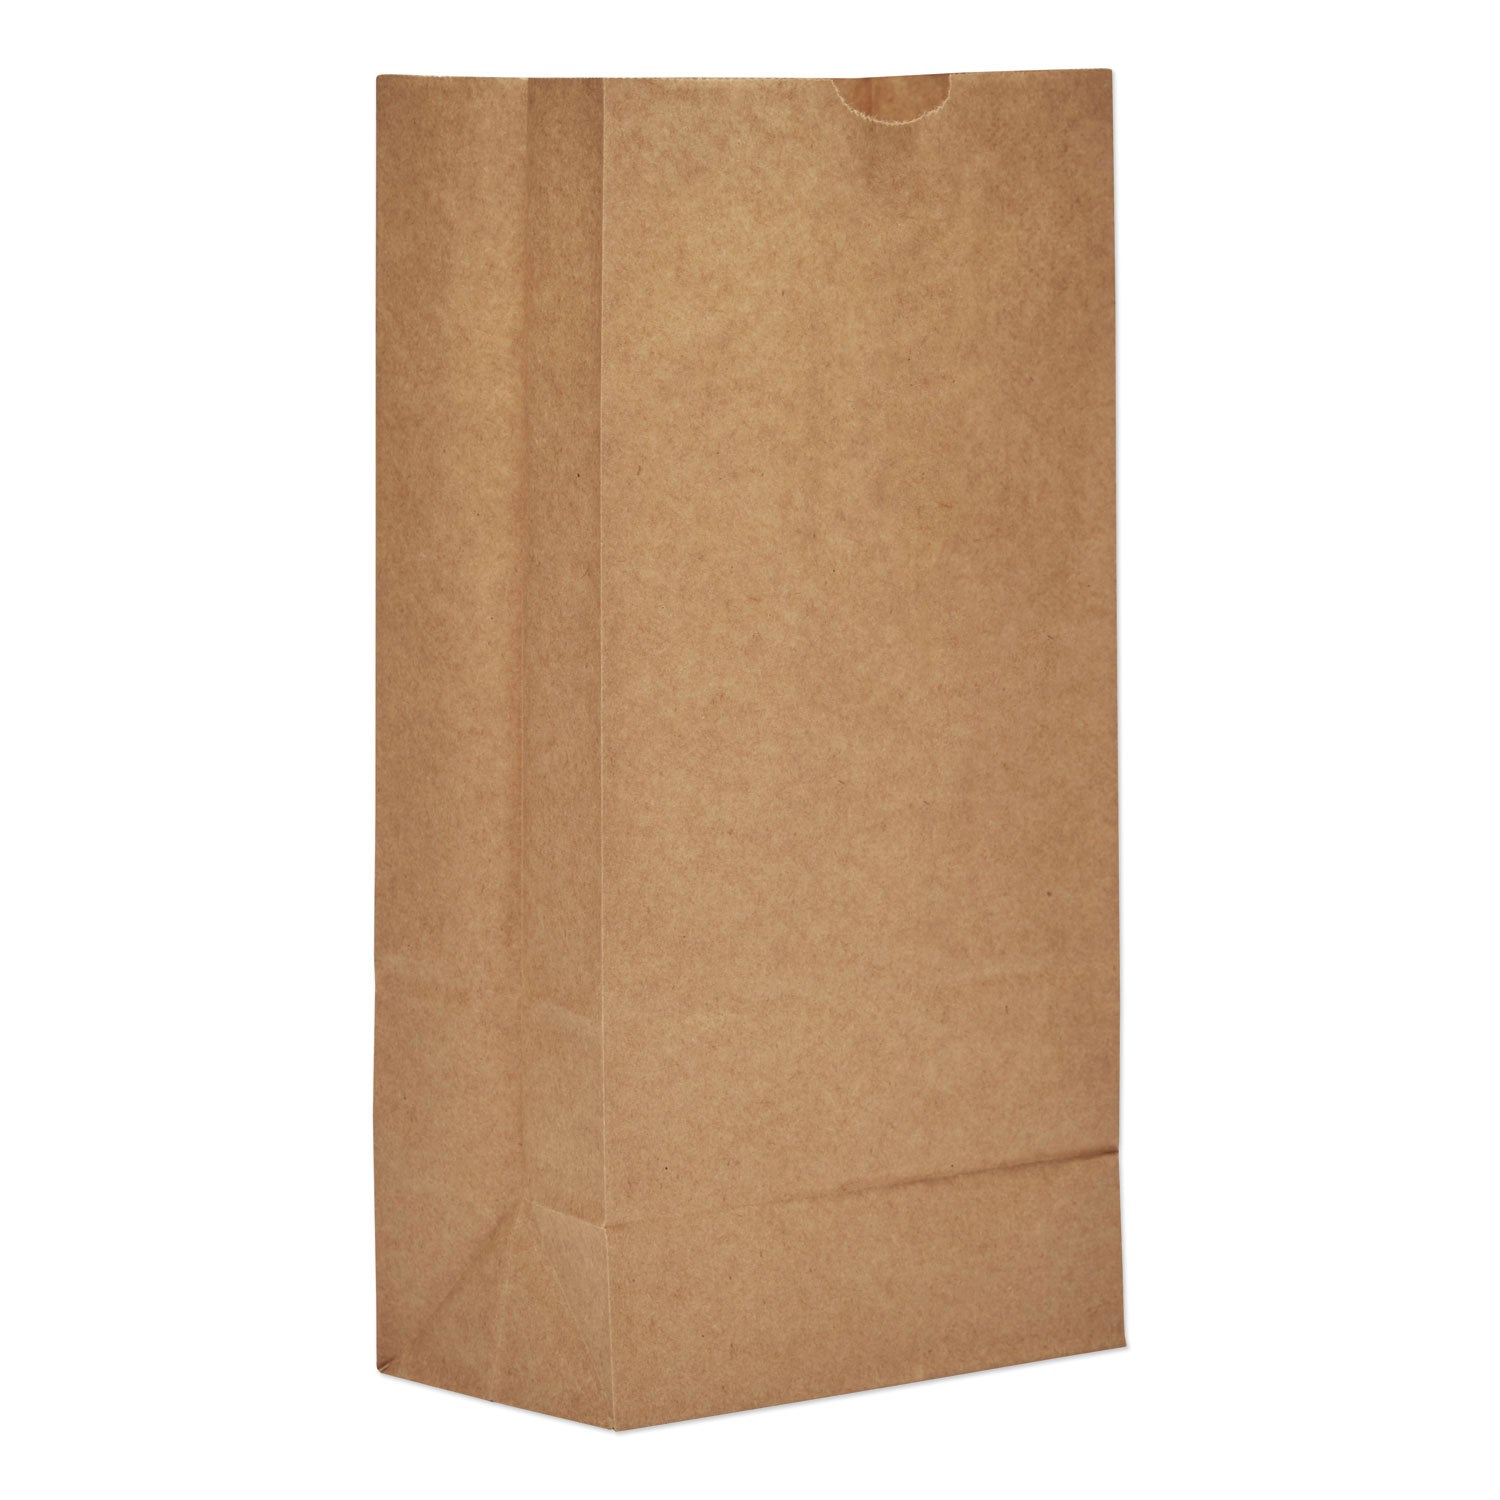 GEN Grocery Paper Bags, 57 lb Capacity, #8, 6.13"" x 4.17"" x 12.44"", Kraft, 500 Bags